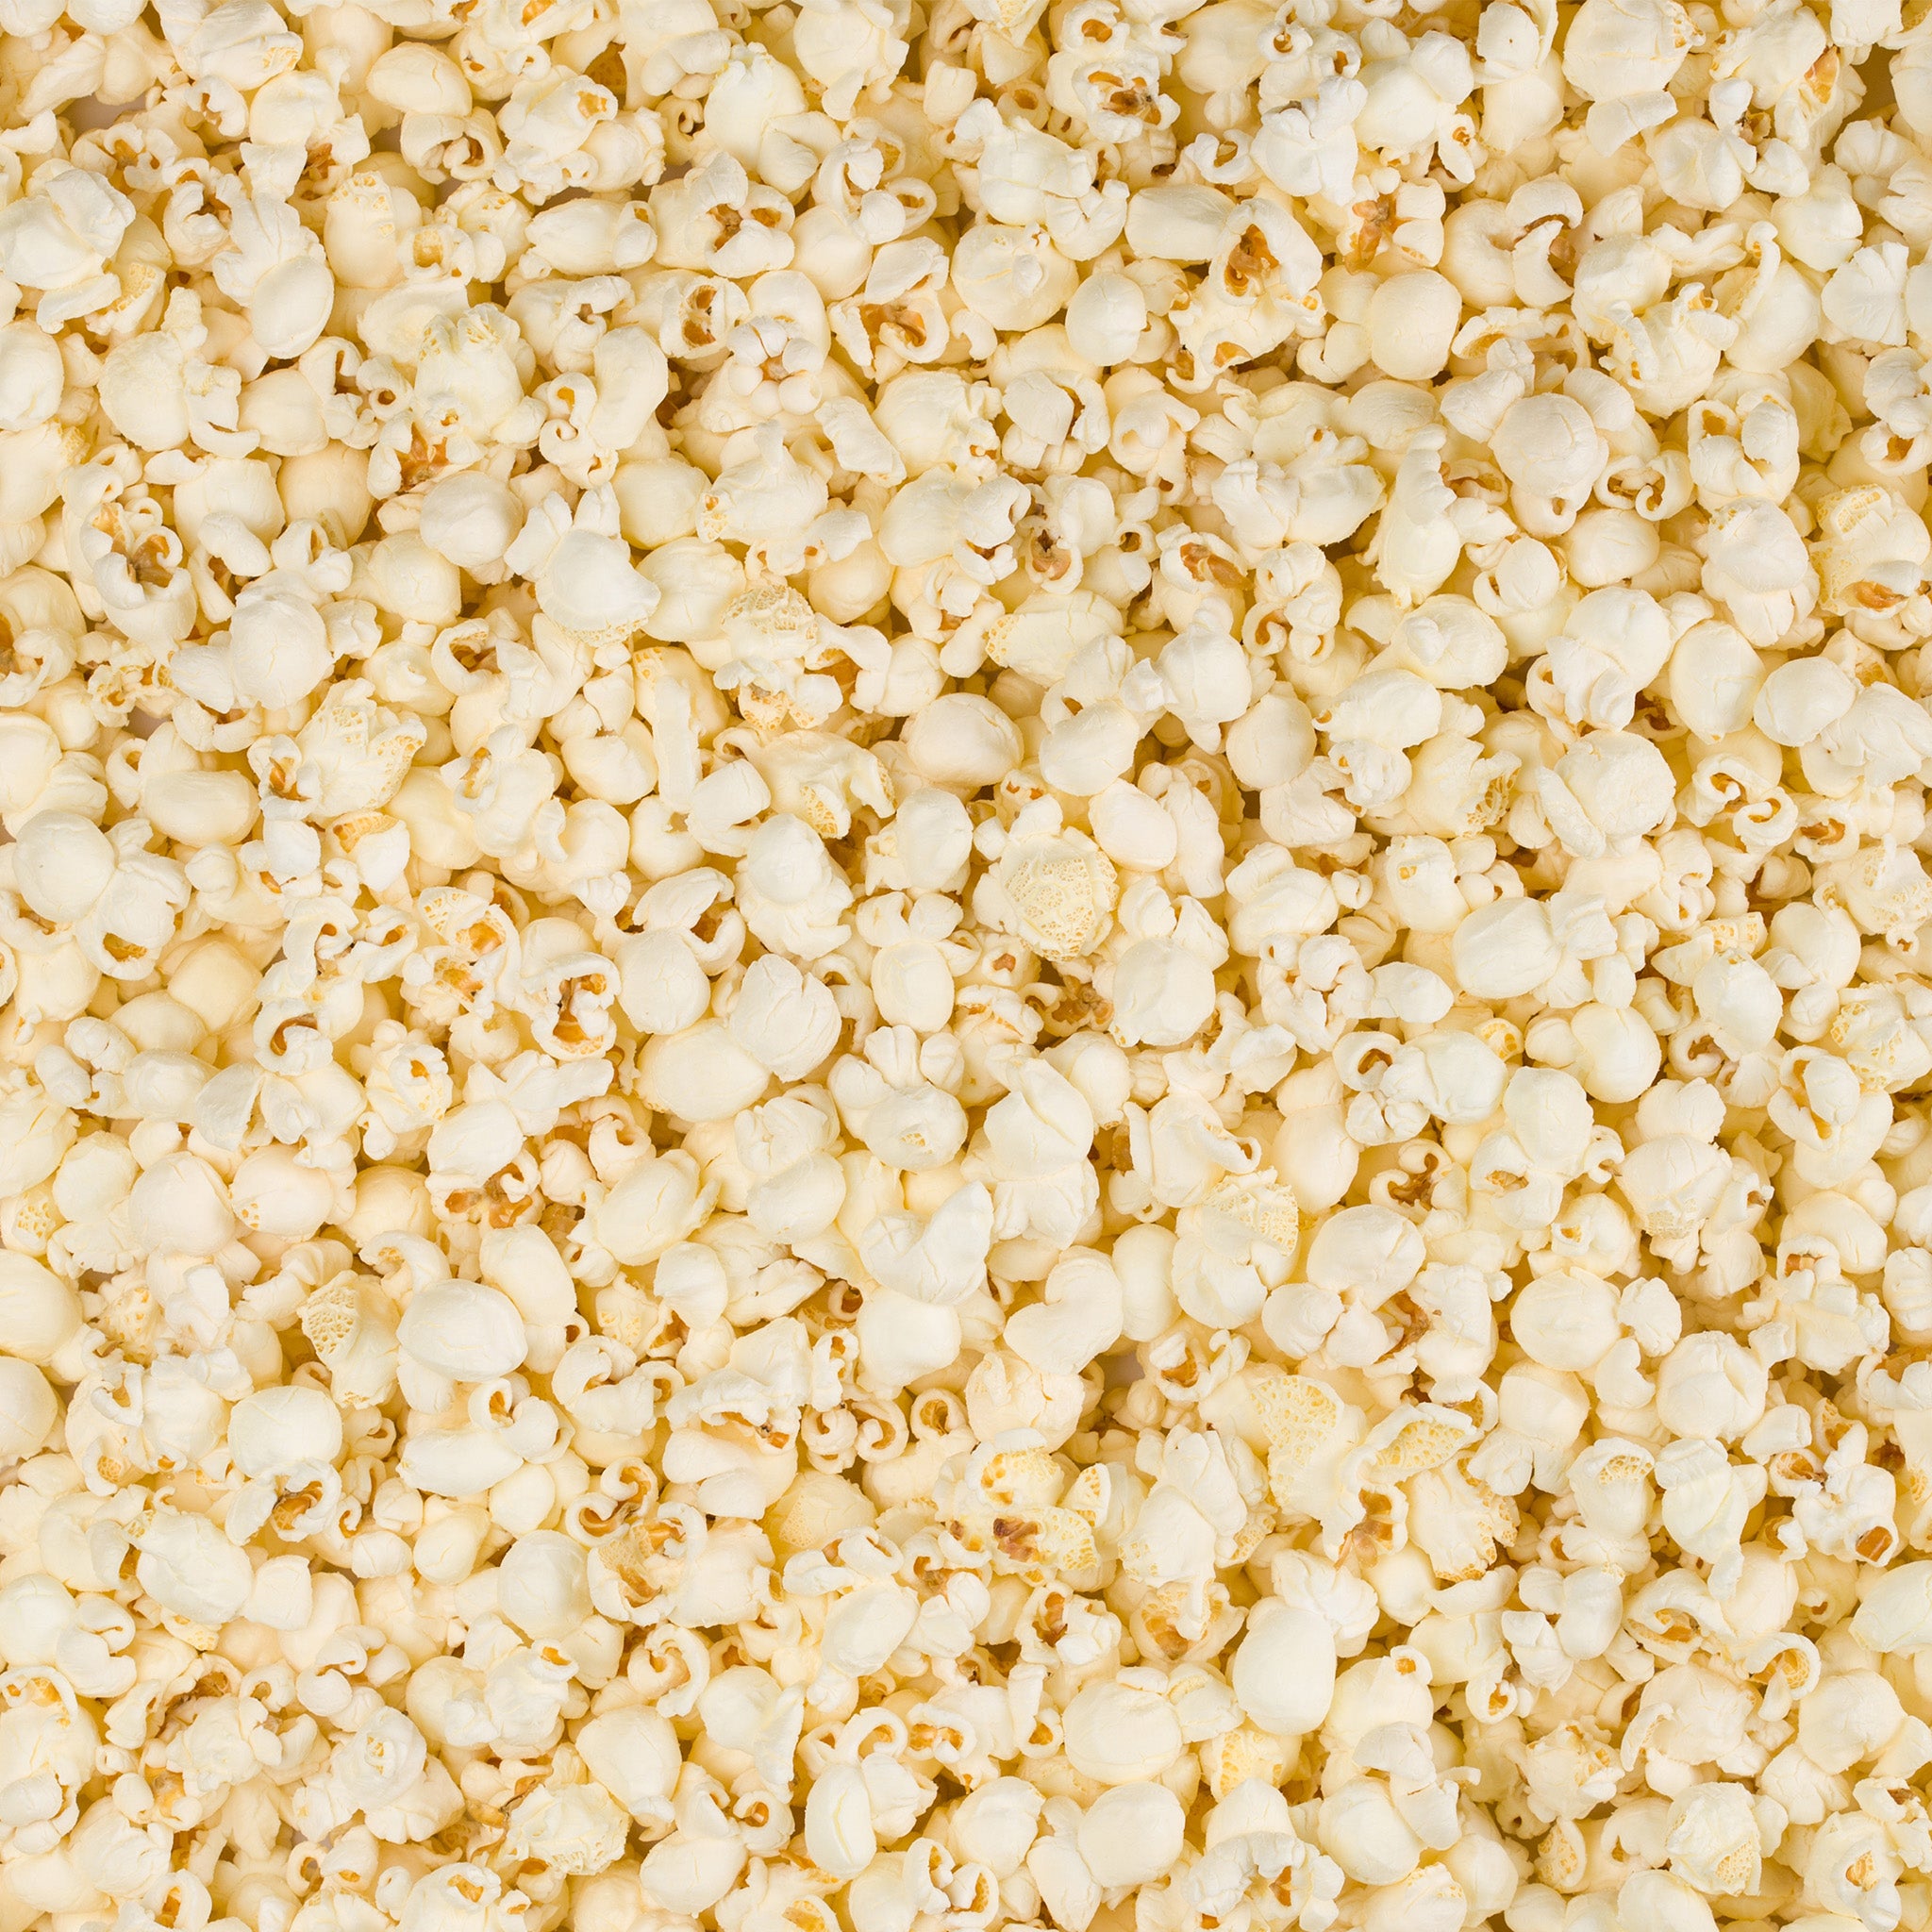 Sweet Popcorn Tubs 96x50g